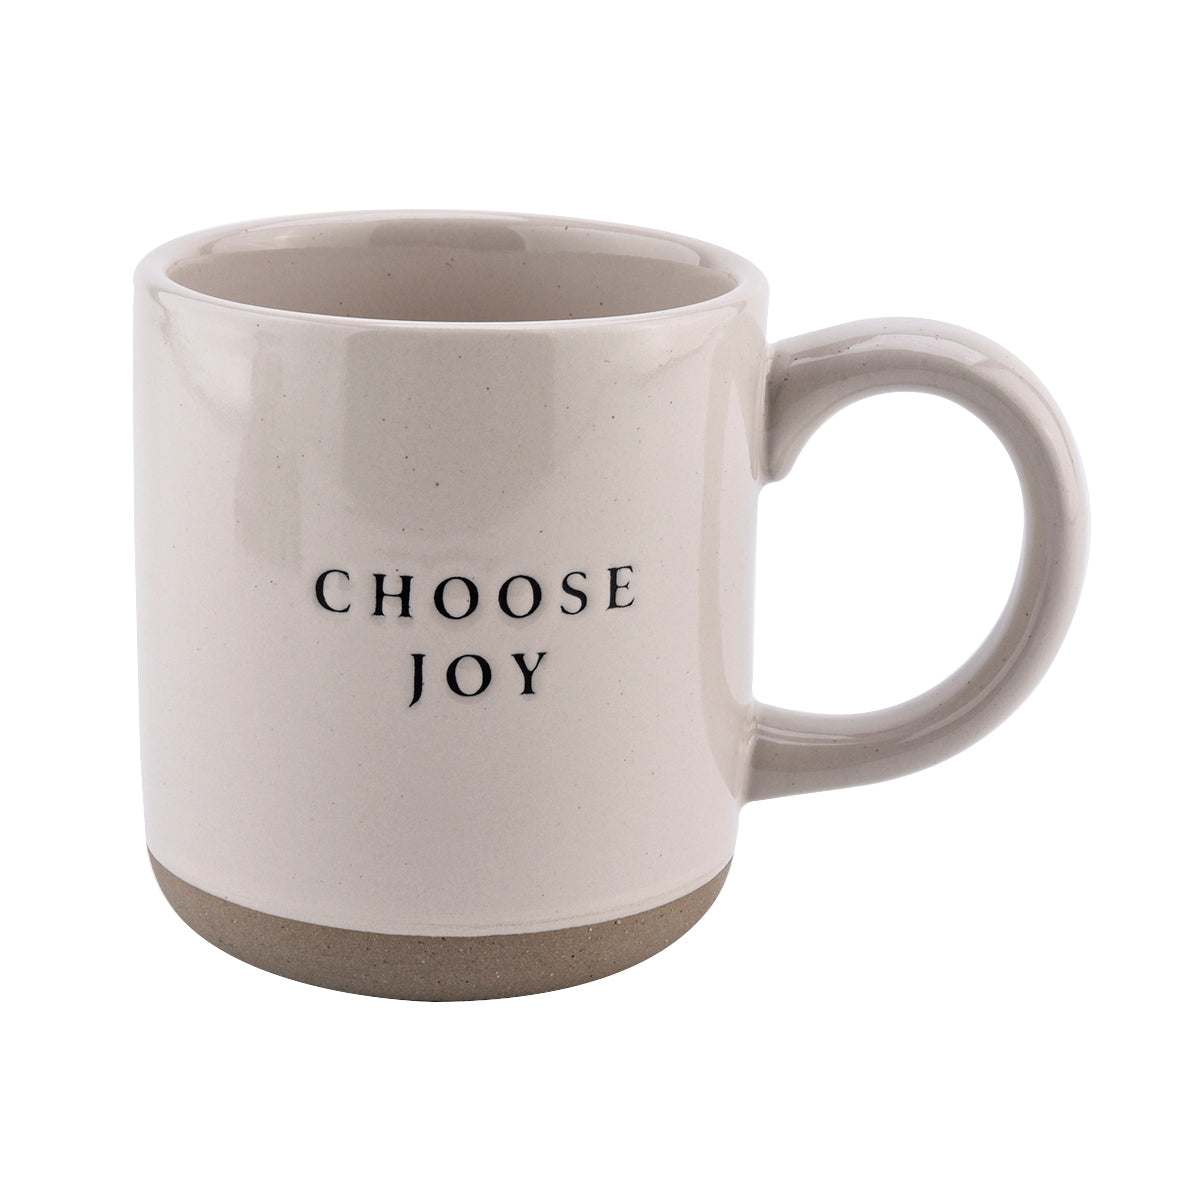 Choose Joy - Cream Stoneware Coffee Mug - 14 oz